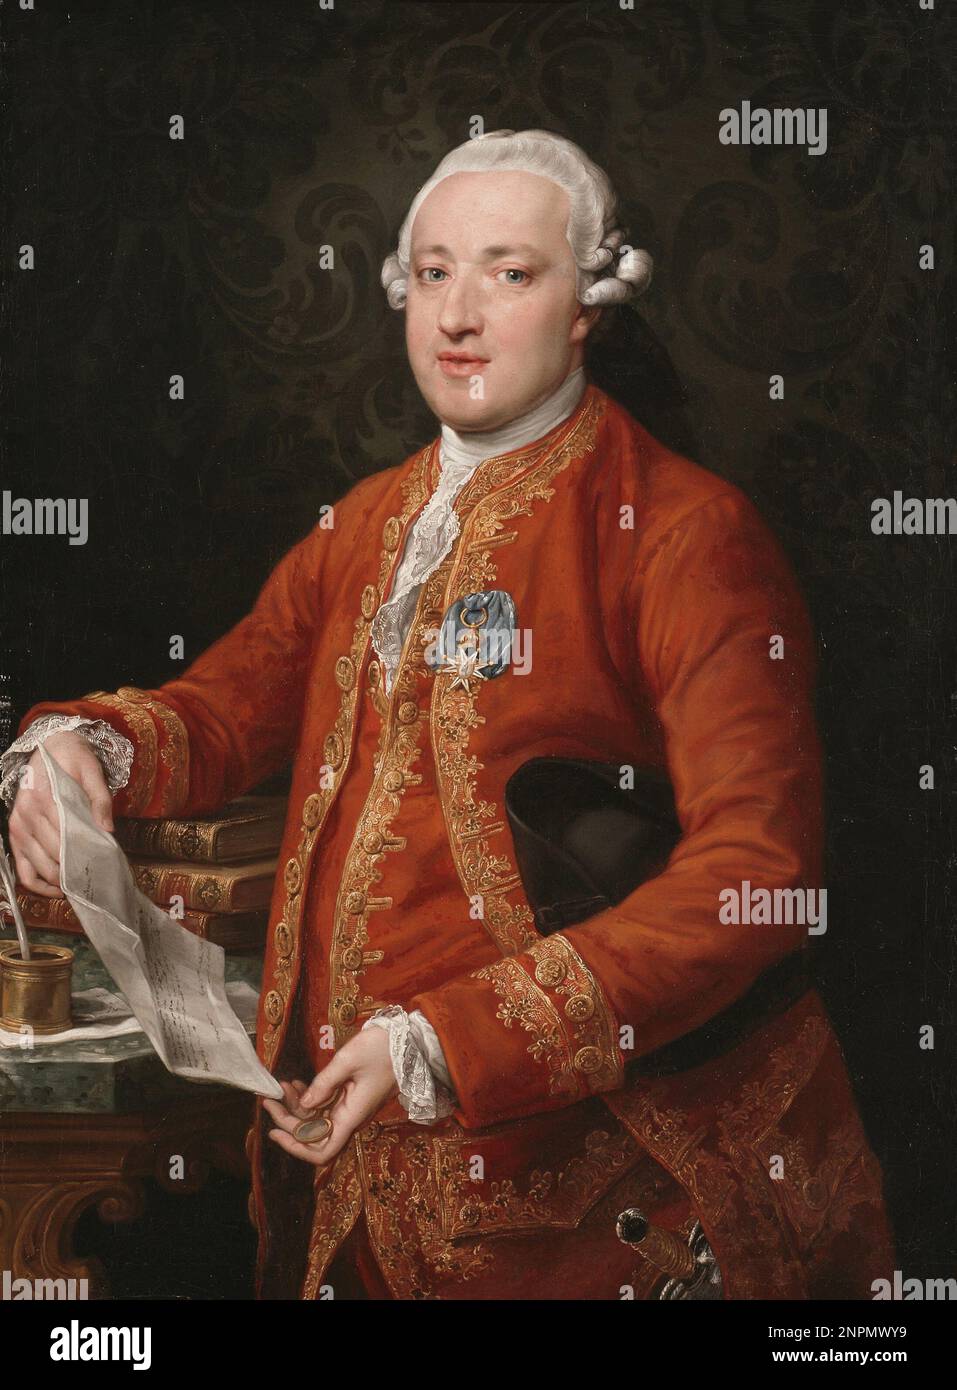 José Moñino y Redondo, 1st comte de Floridblanca (1728 – 1808) homme d'État espagnol. Peinture de Pompeo Batoni Banque D'Images